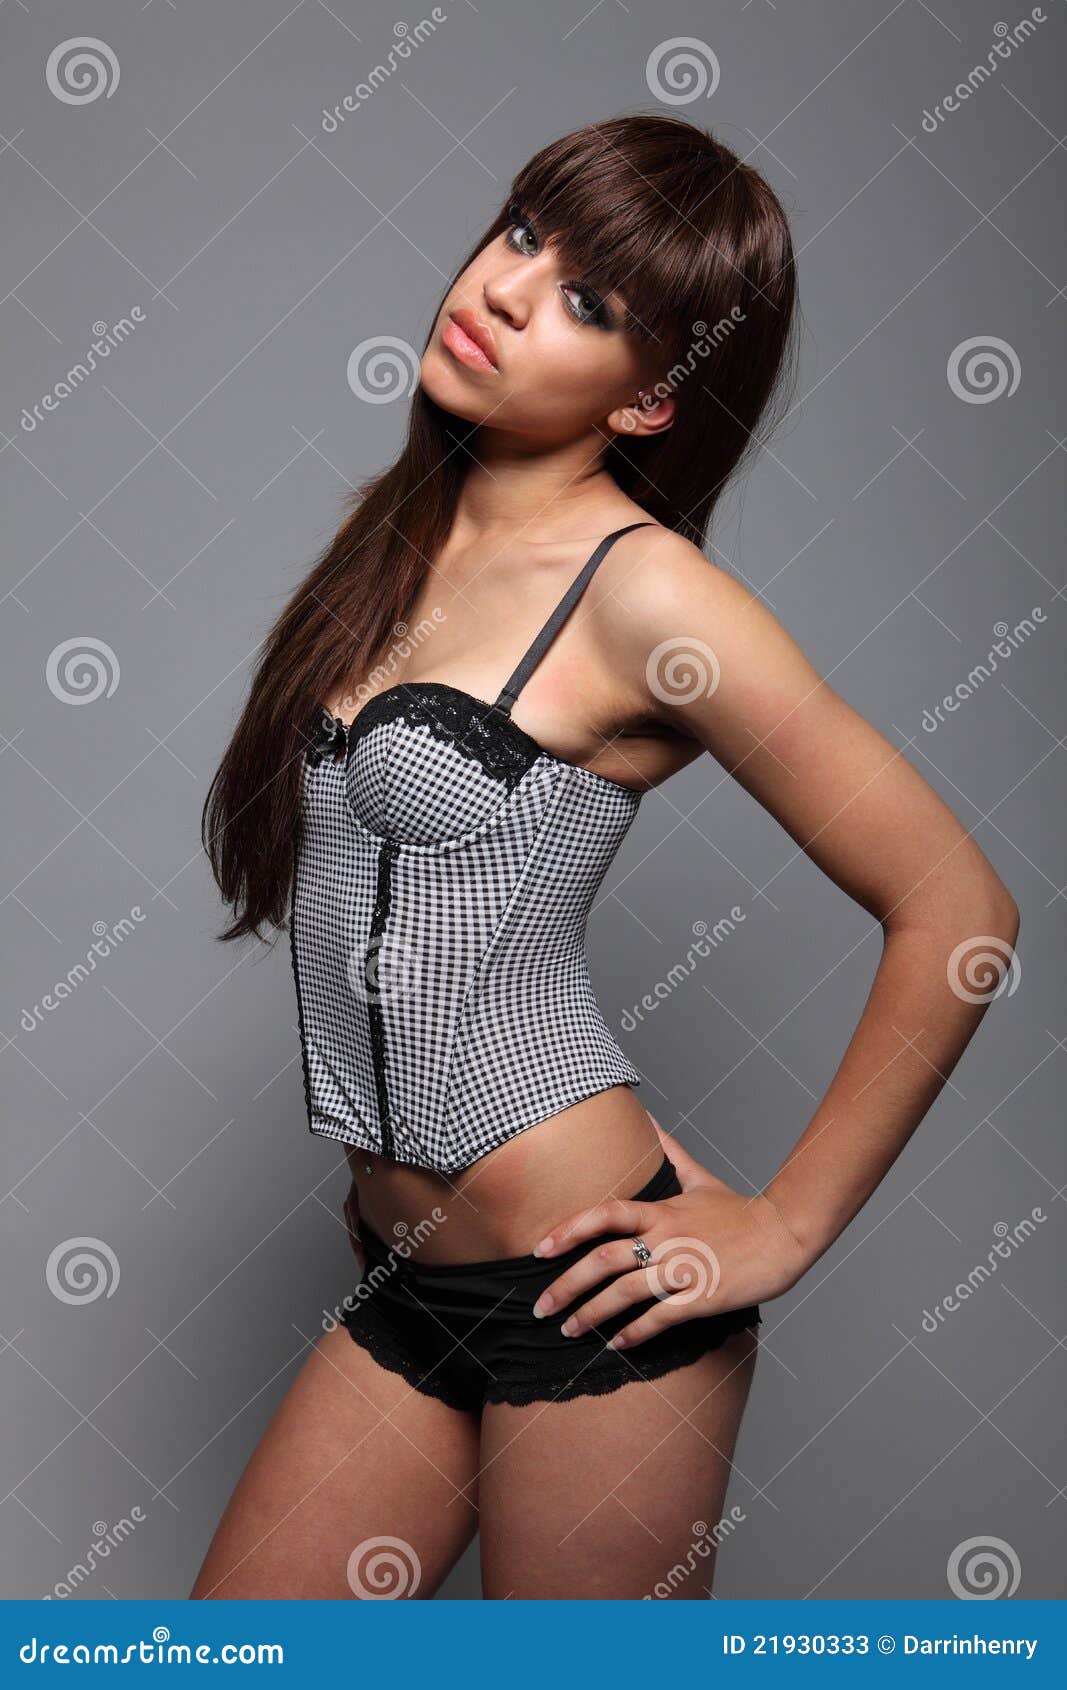 https://thumbs.dreamstime.com/z/beautiful-lingerie-girl-sexy-corset-underwear-21930333.jpg